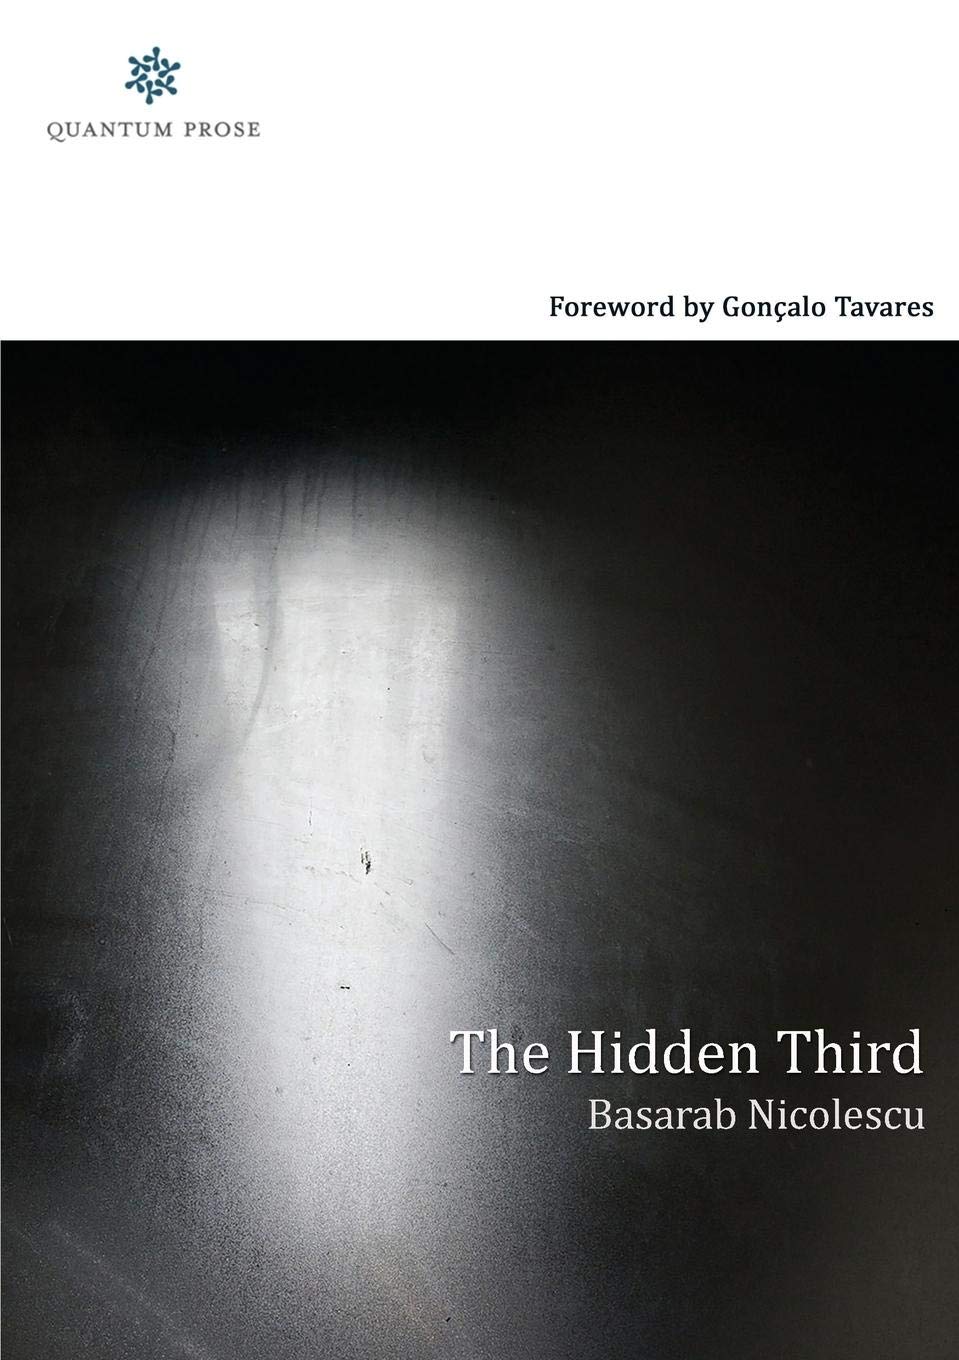 The Hidden Third by Basarab Nicolescu